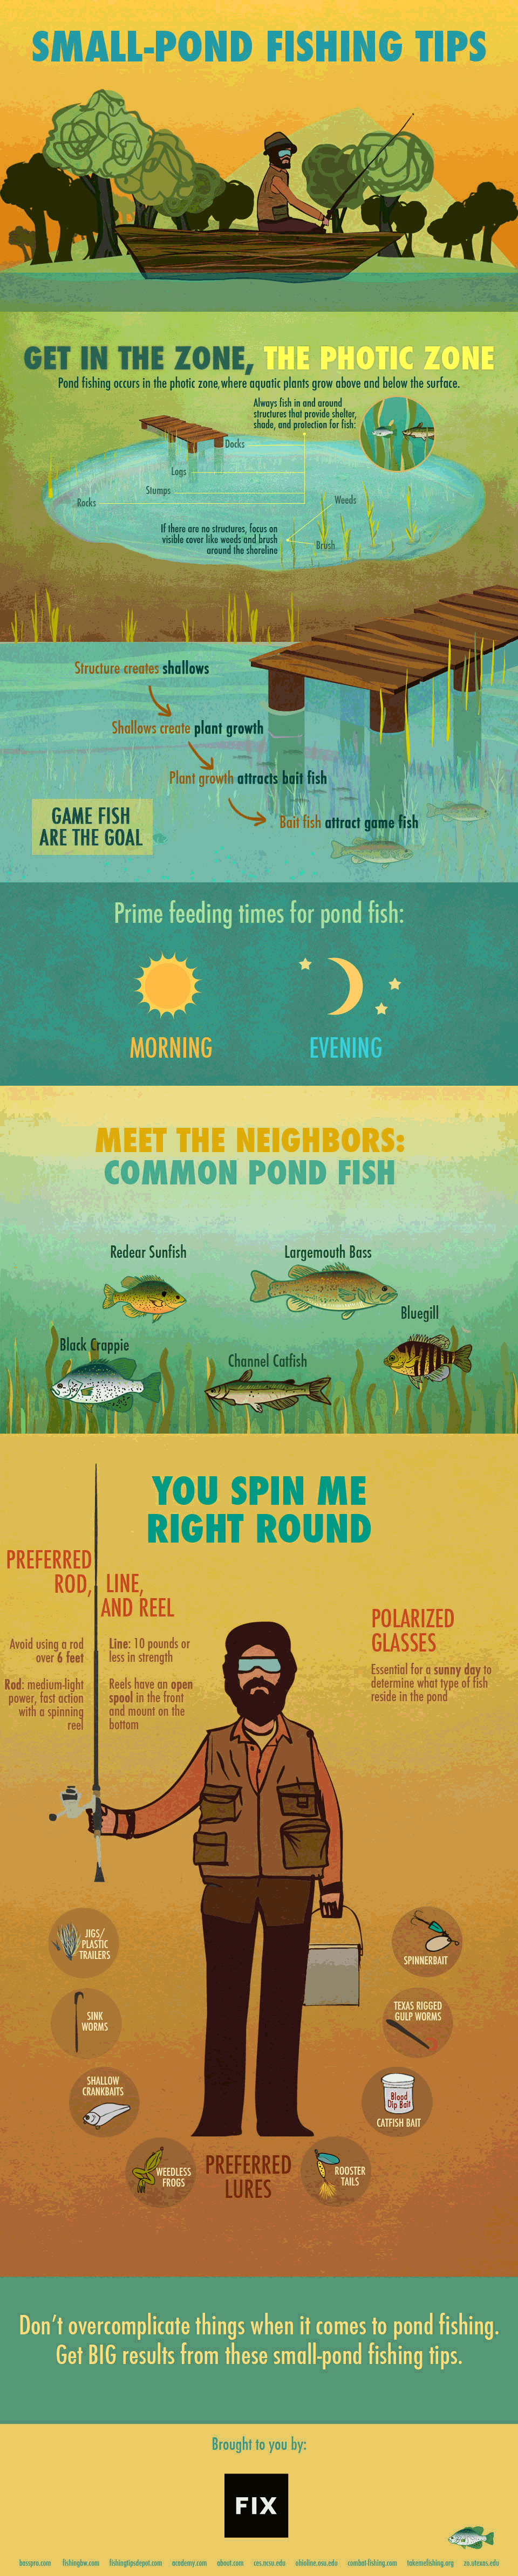 Small-Pond Fishing Tips